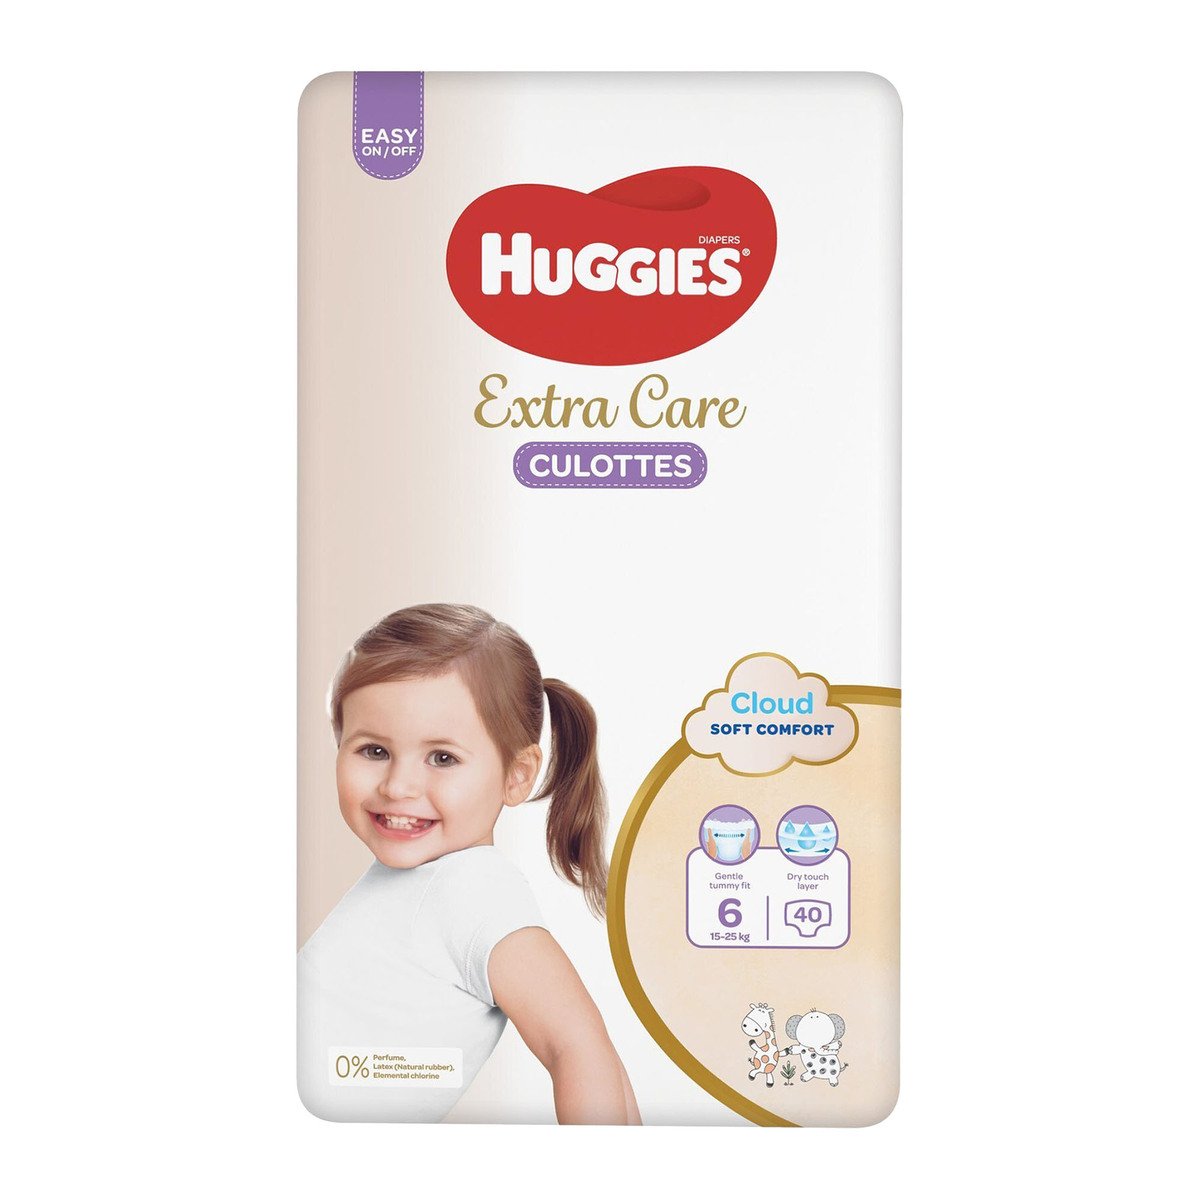 Huggies Extra Care Culottes Diaper Pants Size 6, 15-25kg Value Pack 40 pcs